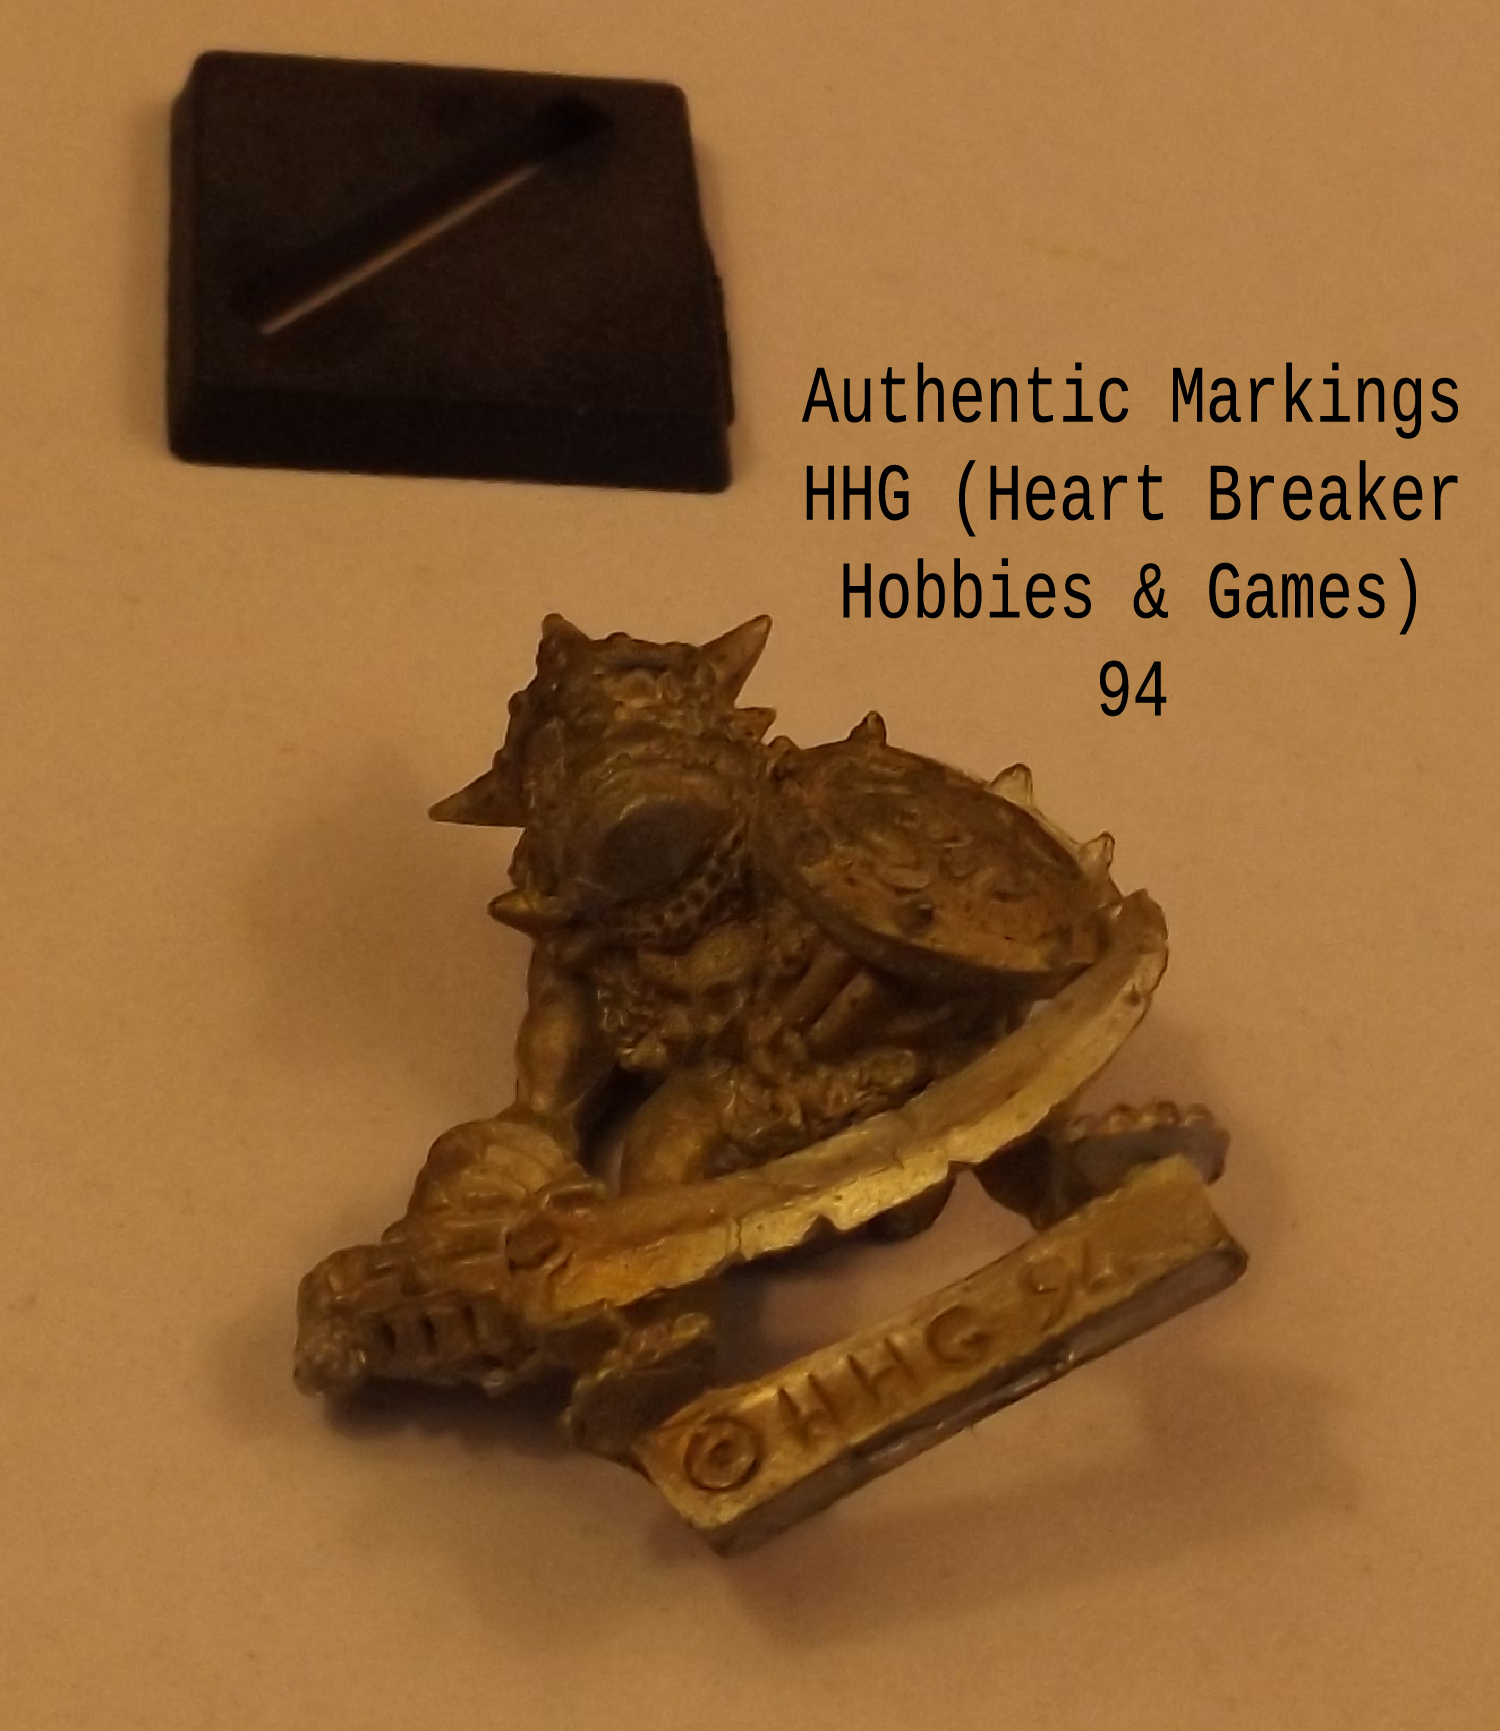 Authentic Markings HHG (Heart Breaker Hobbies & Games) 94